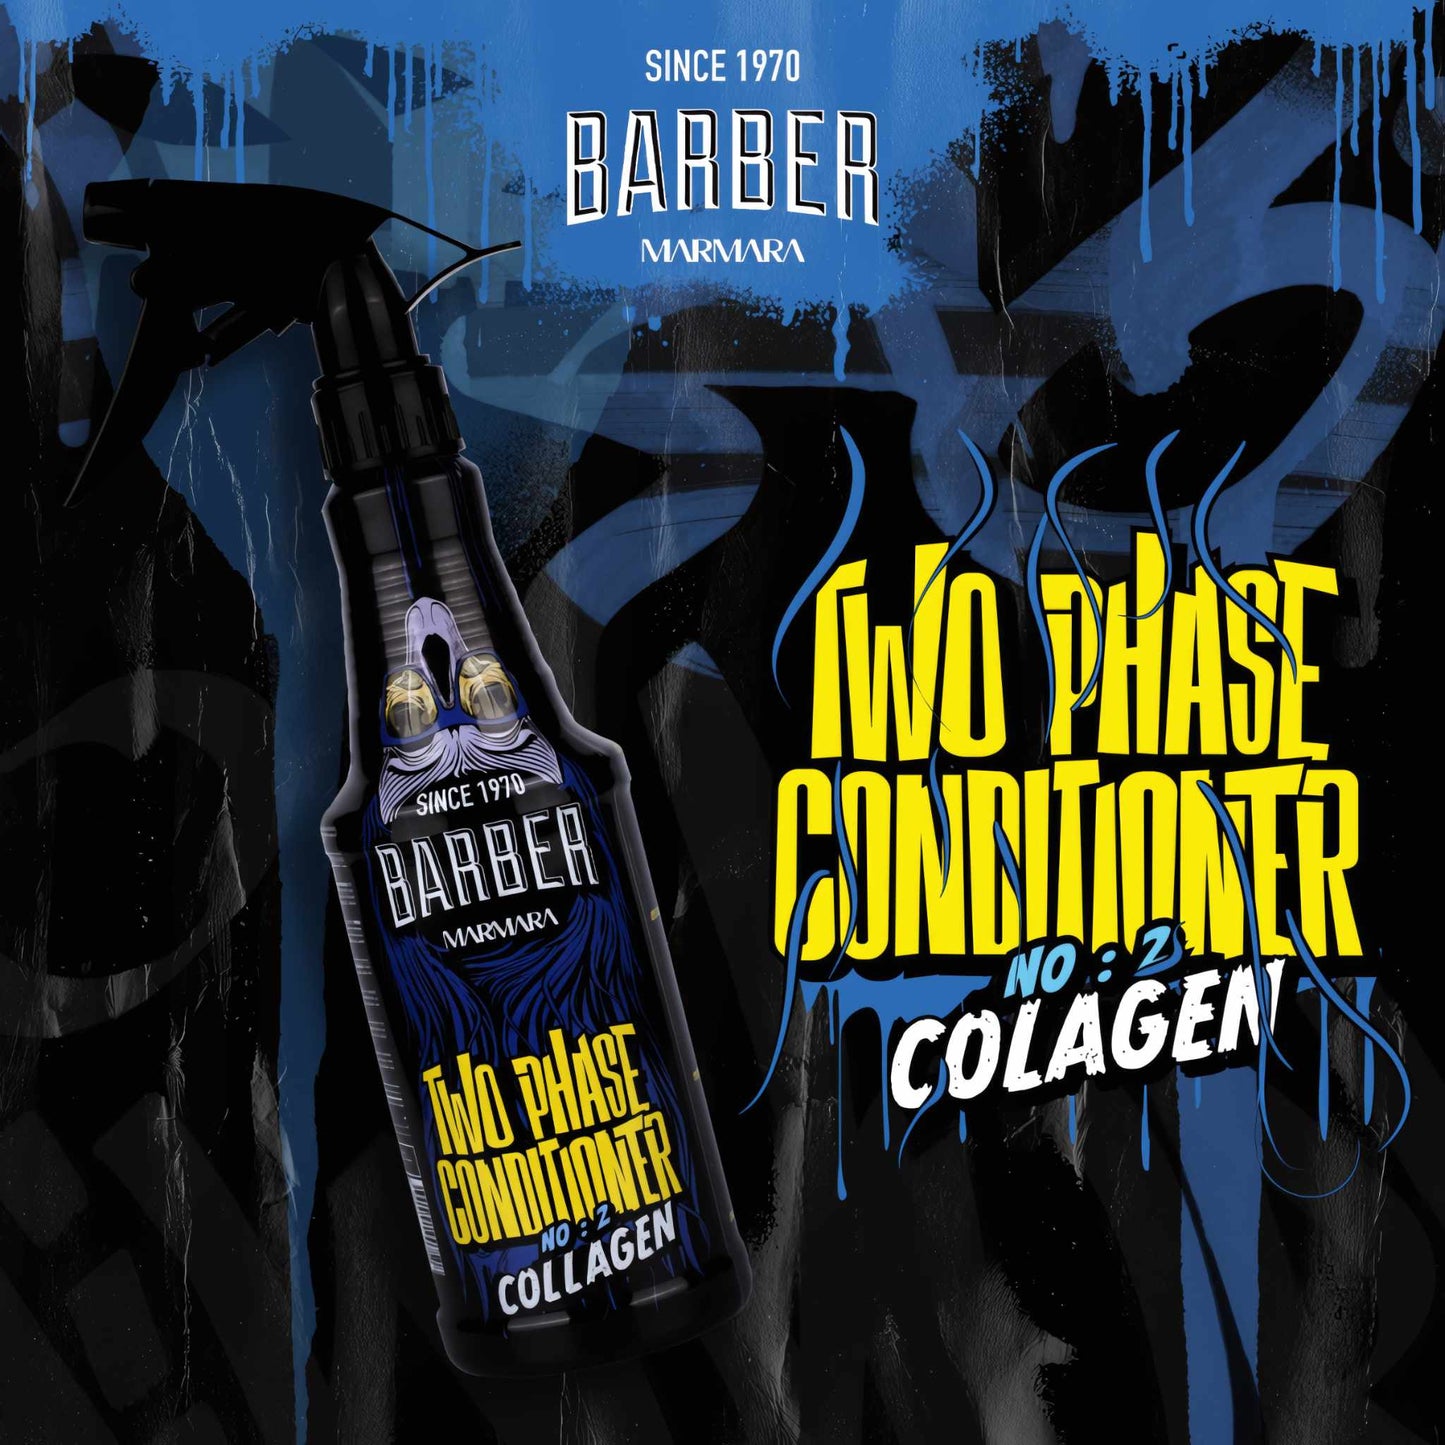 Marmara Barber Twee Fasen Conditioner No. 2 Collagen Leave in 500 ml